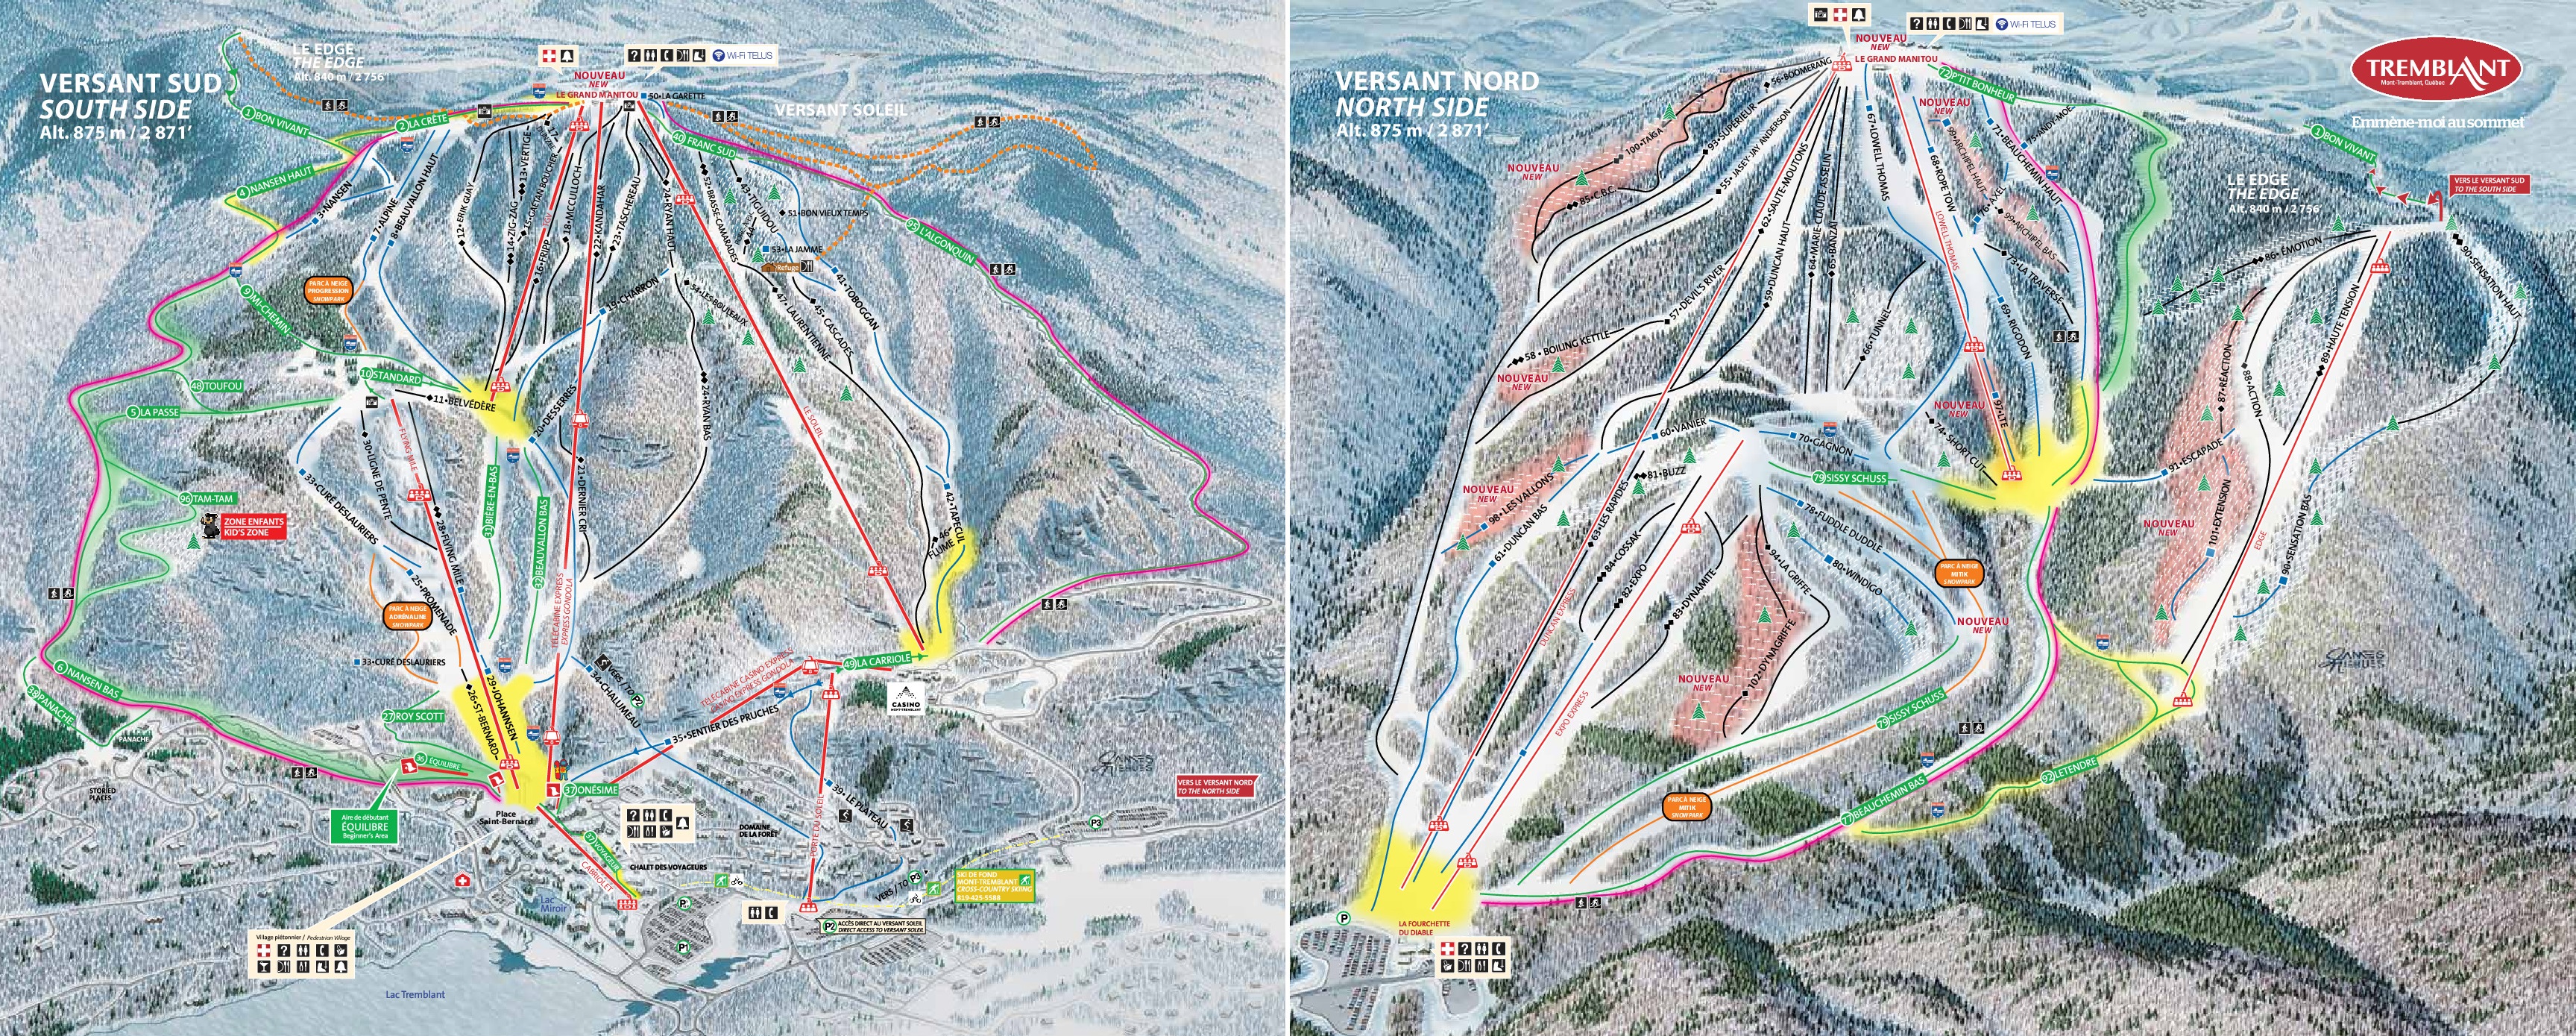 Mont Tremblant trail map